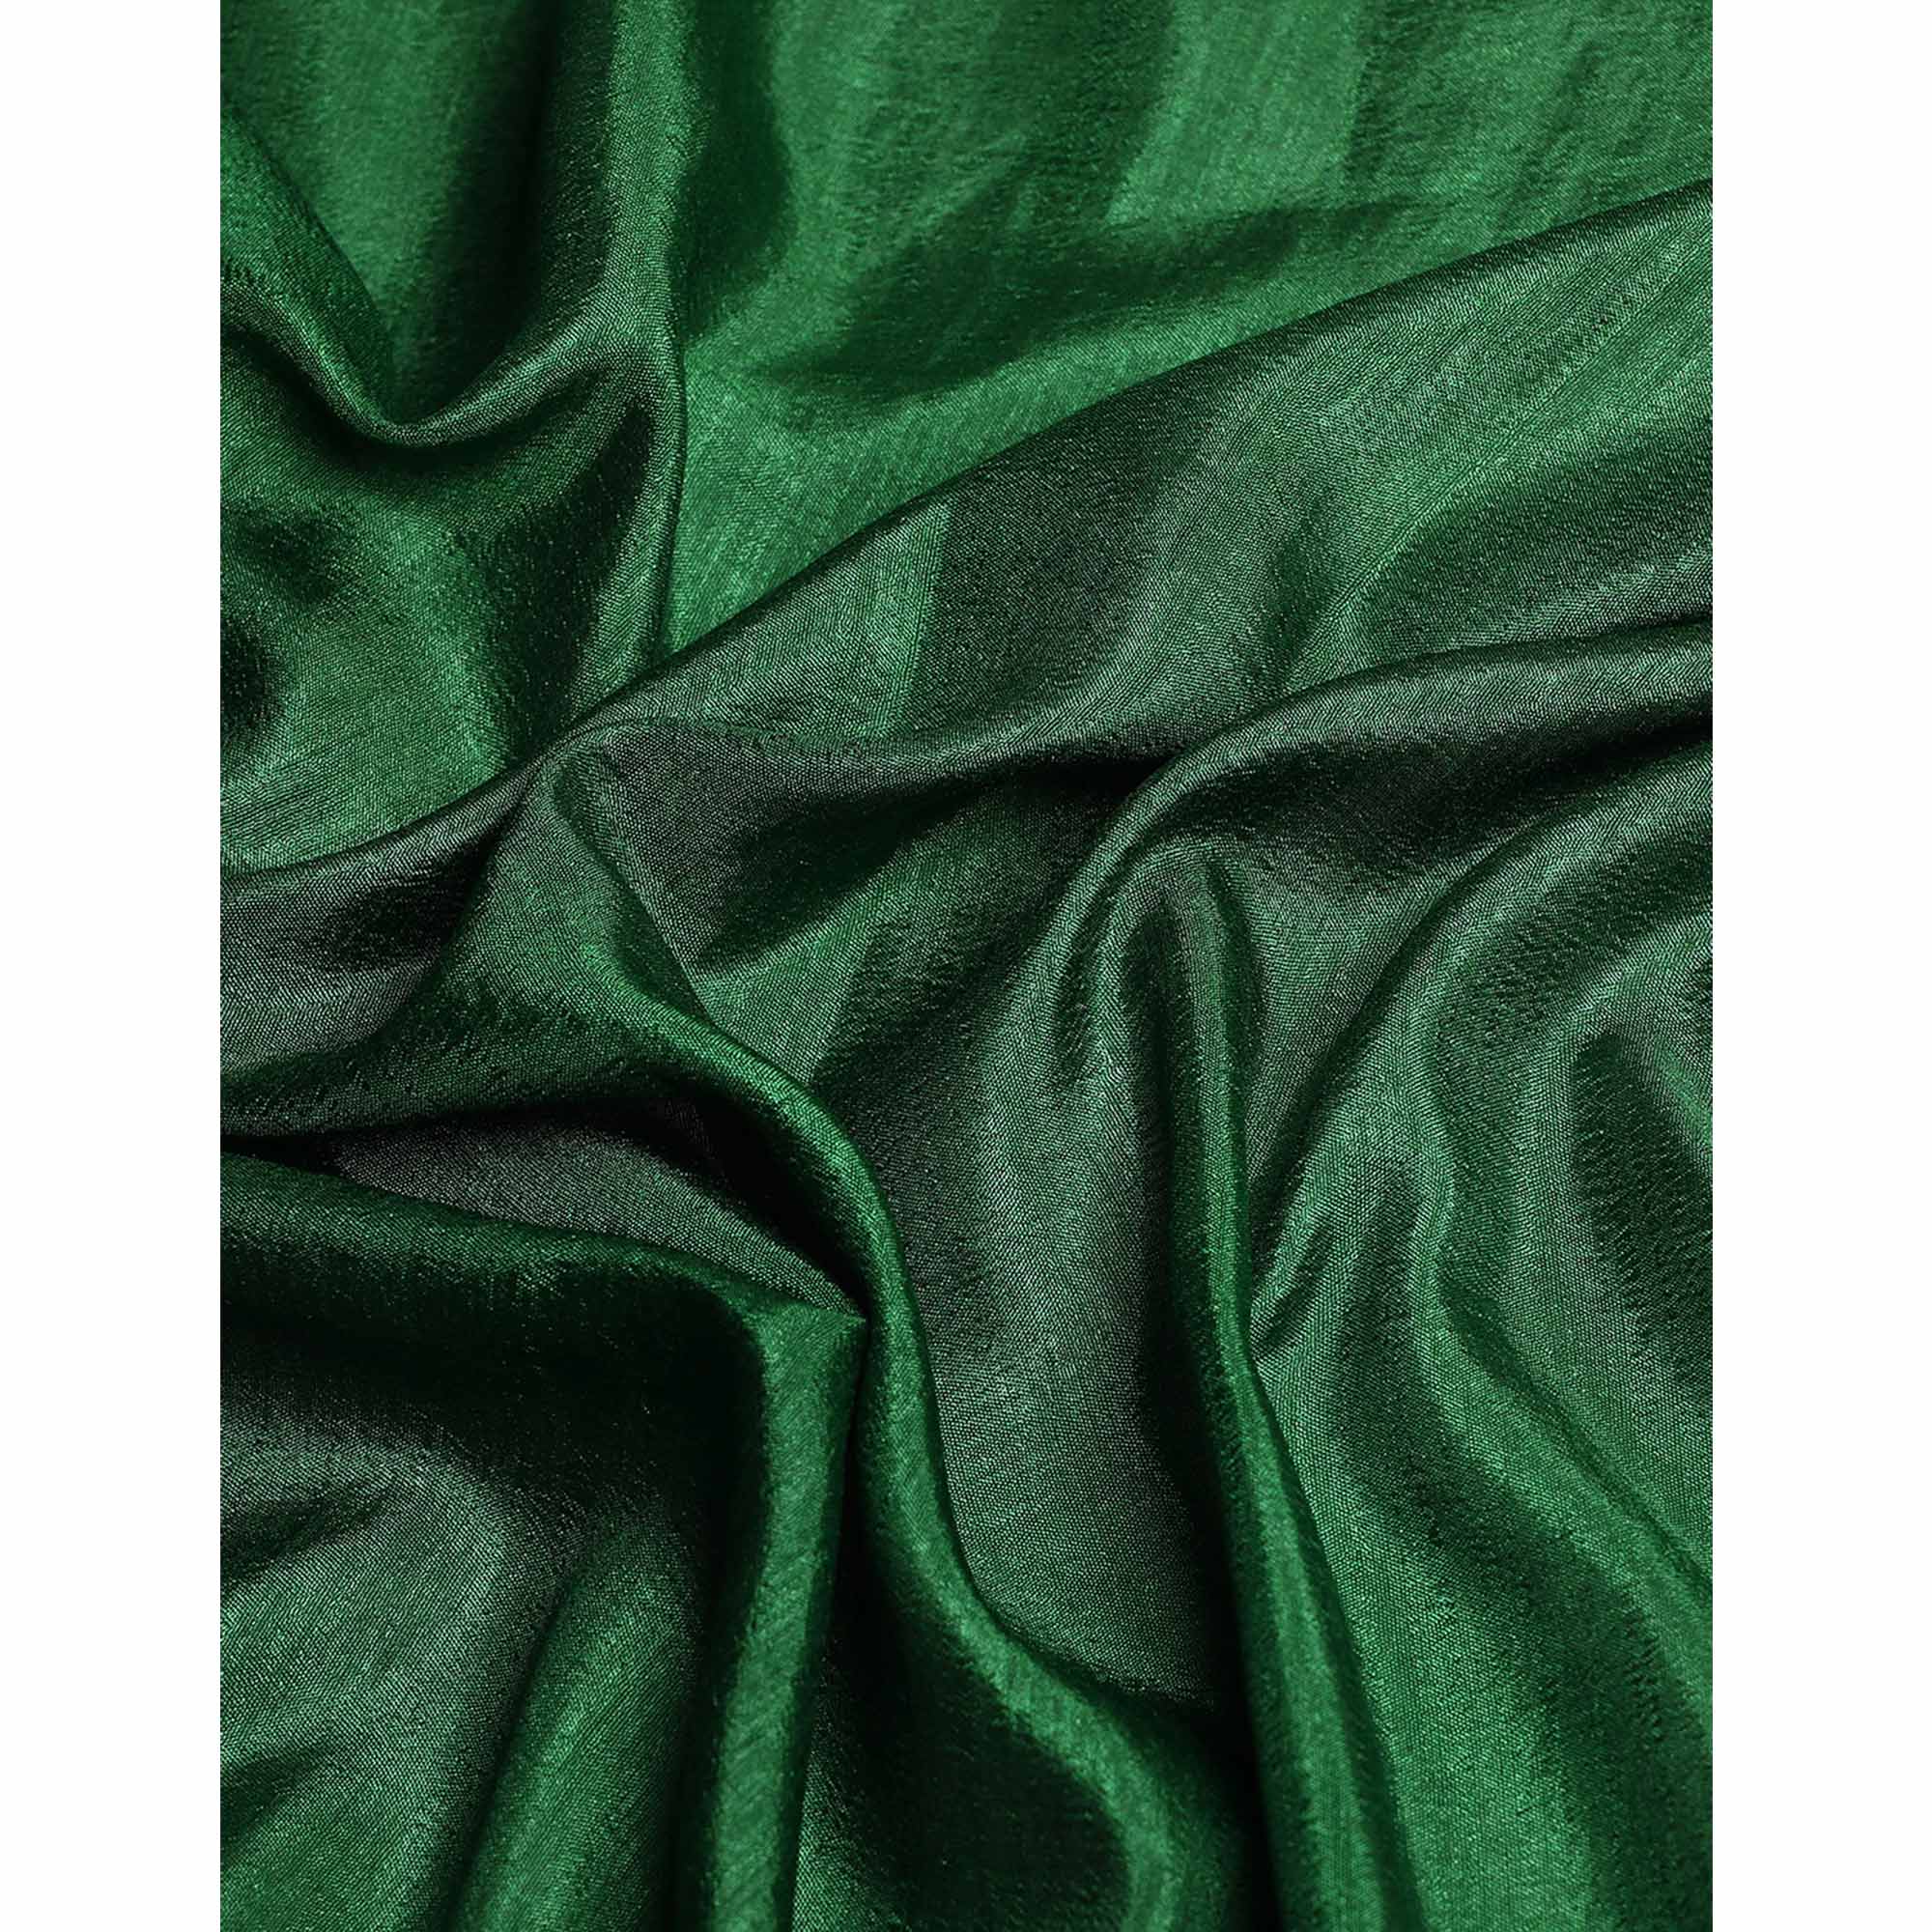 Green Solid Vichitra Silk Saree With Fancy Zari Border